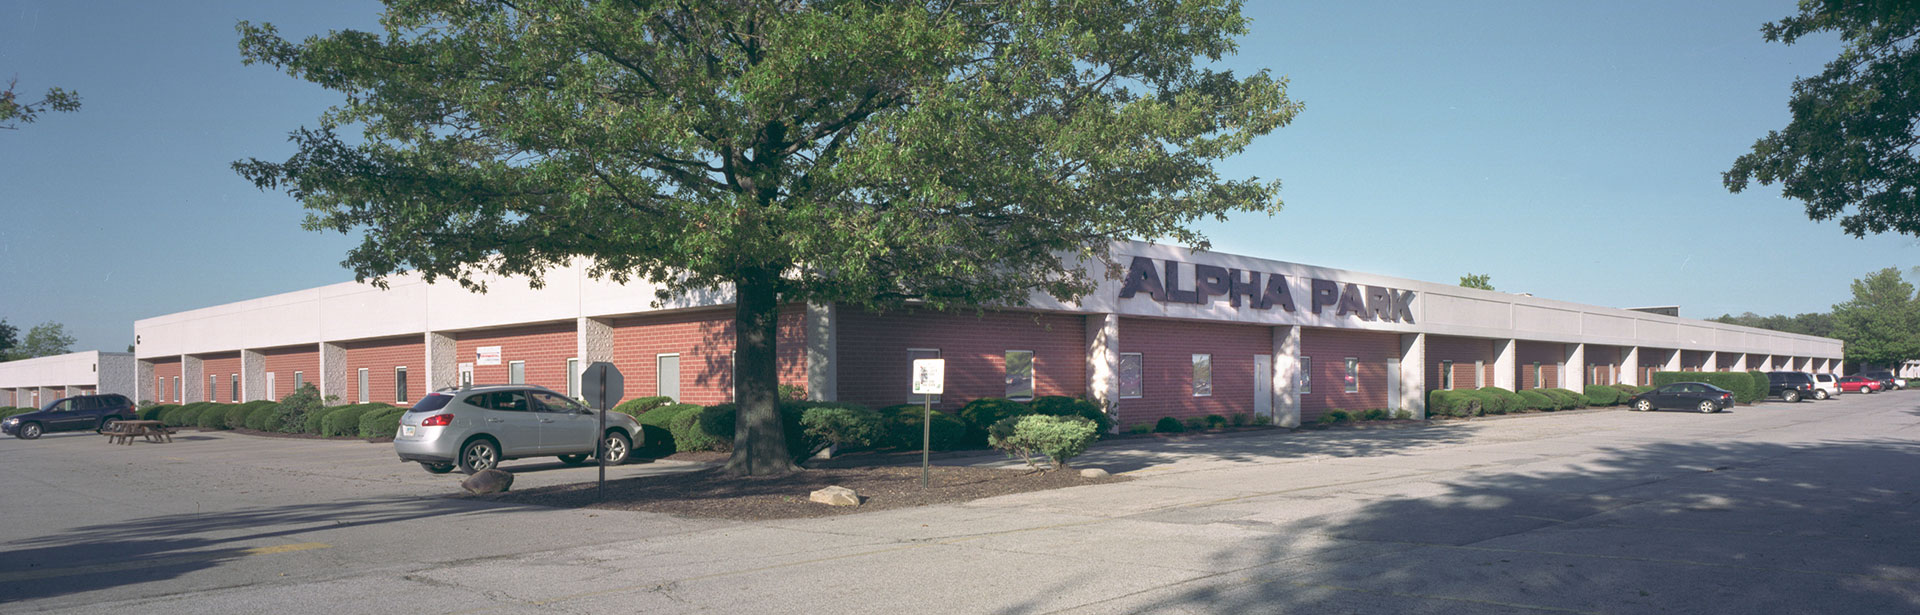 Alpha Park Office Industrial Complex